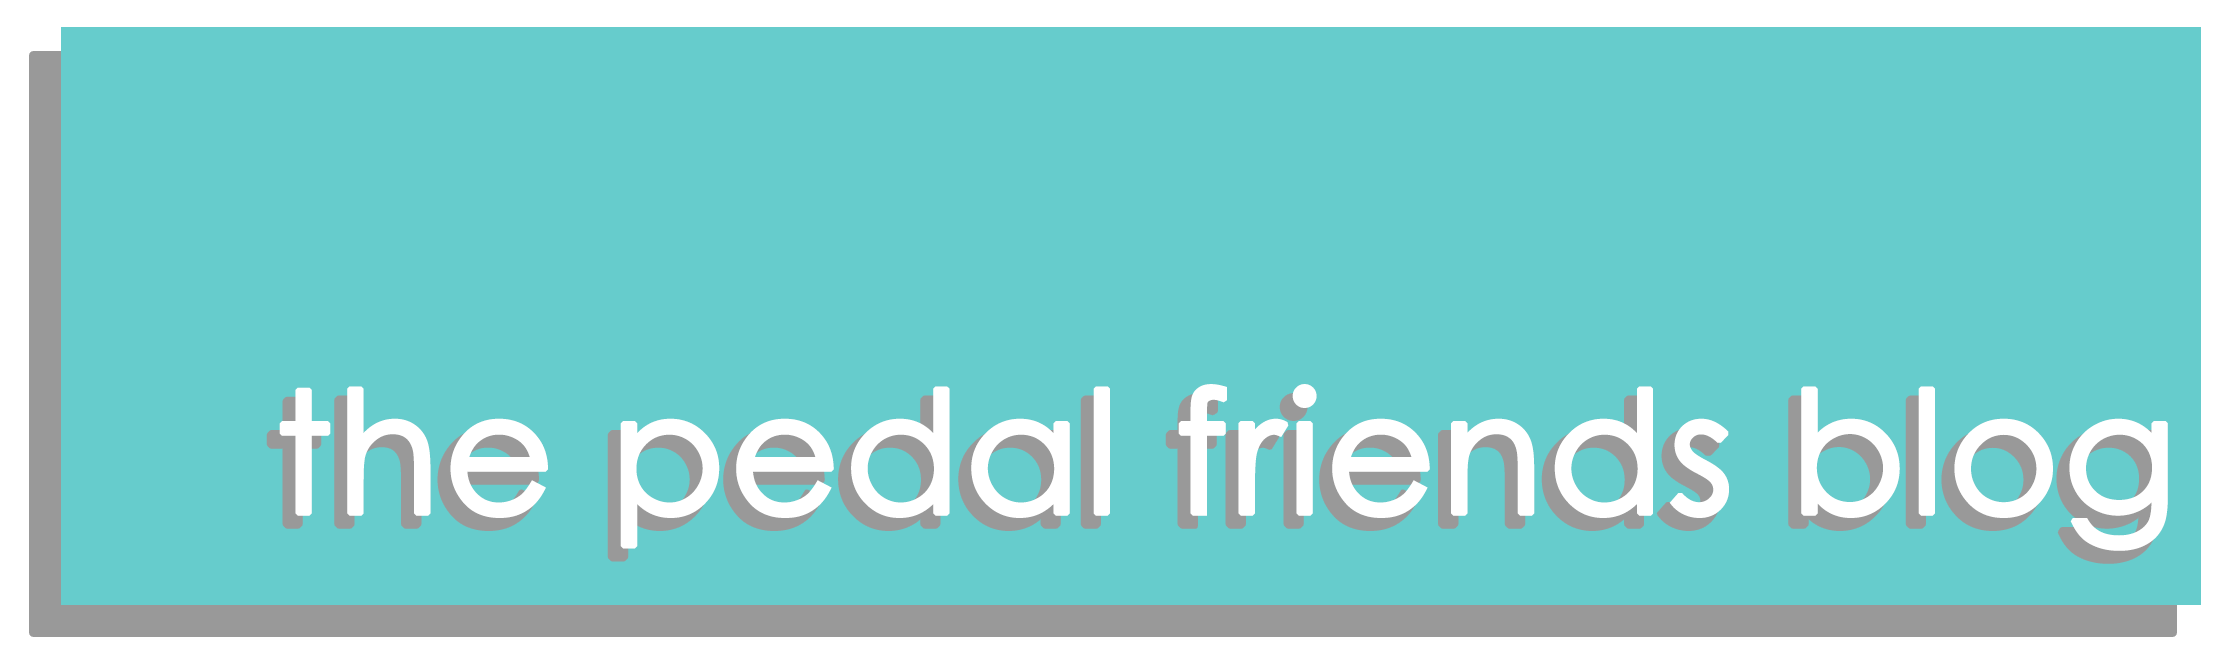 pedal friends blog logo